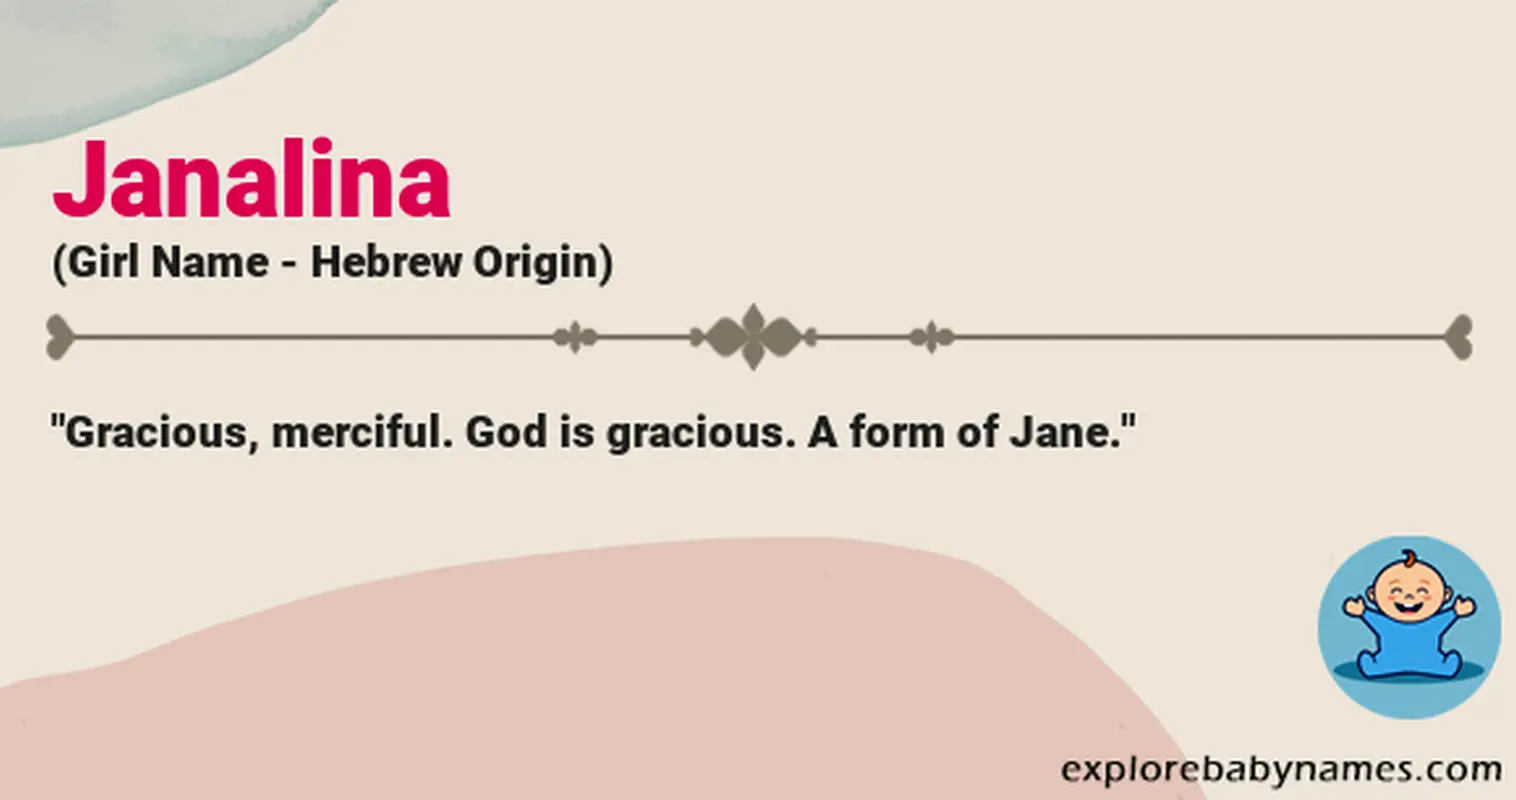 Meaning of Janalina